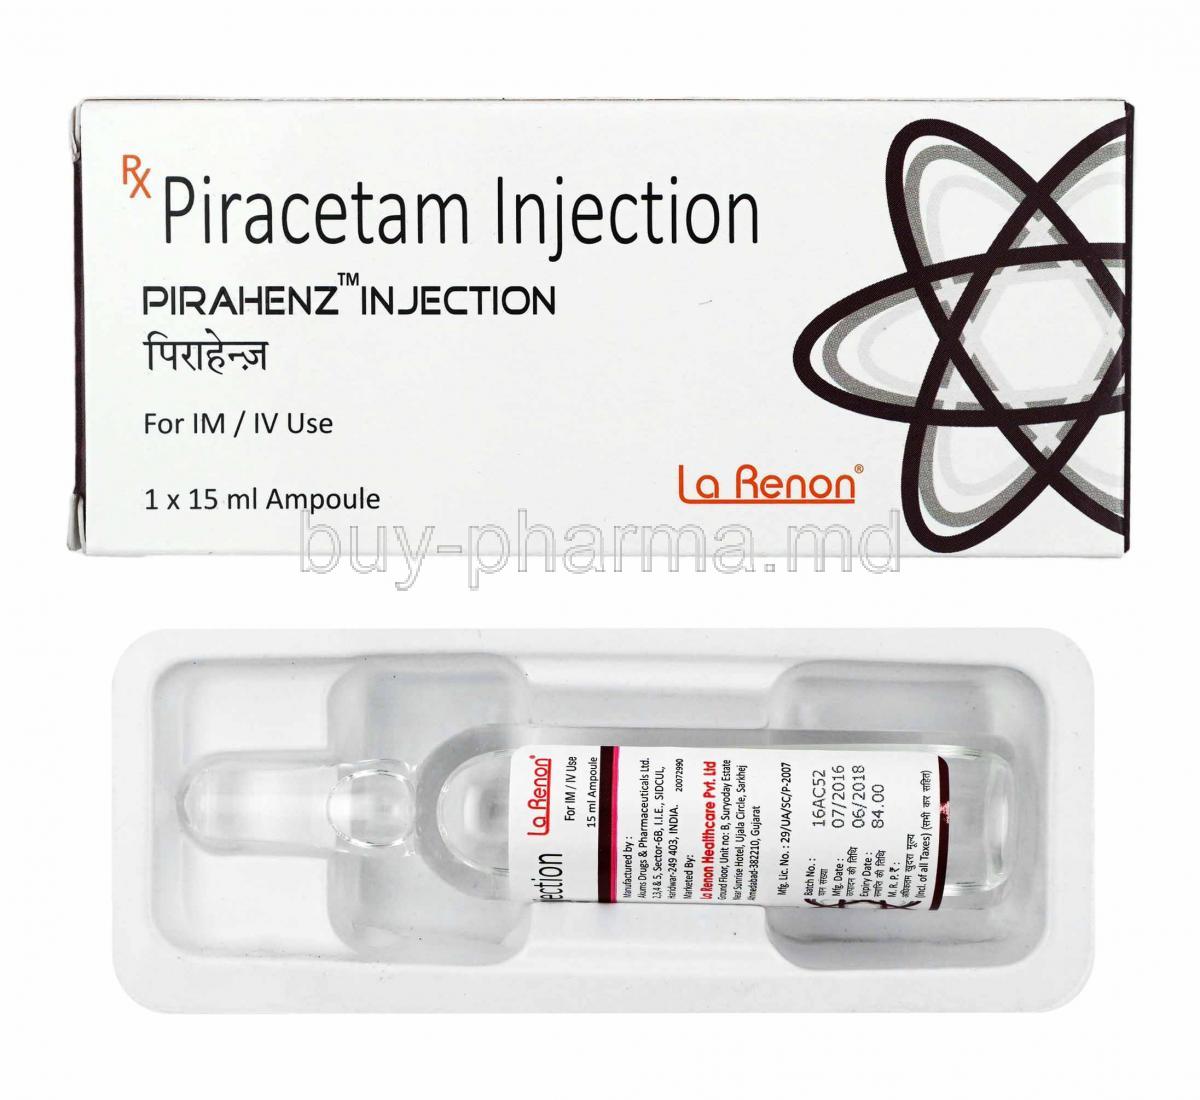 Pirahenz Injection, Piracetam box and ampoules